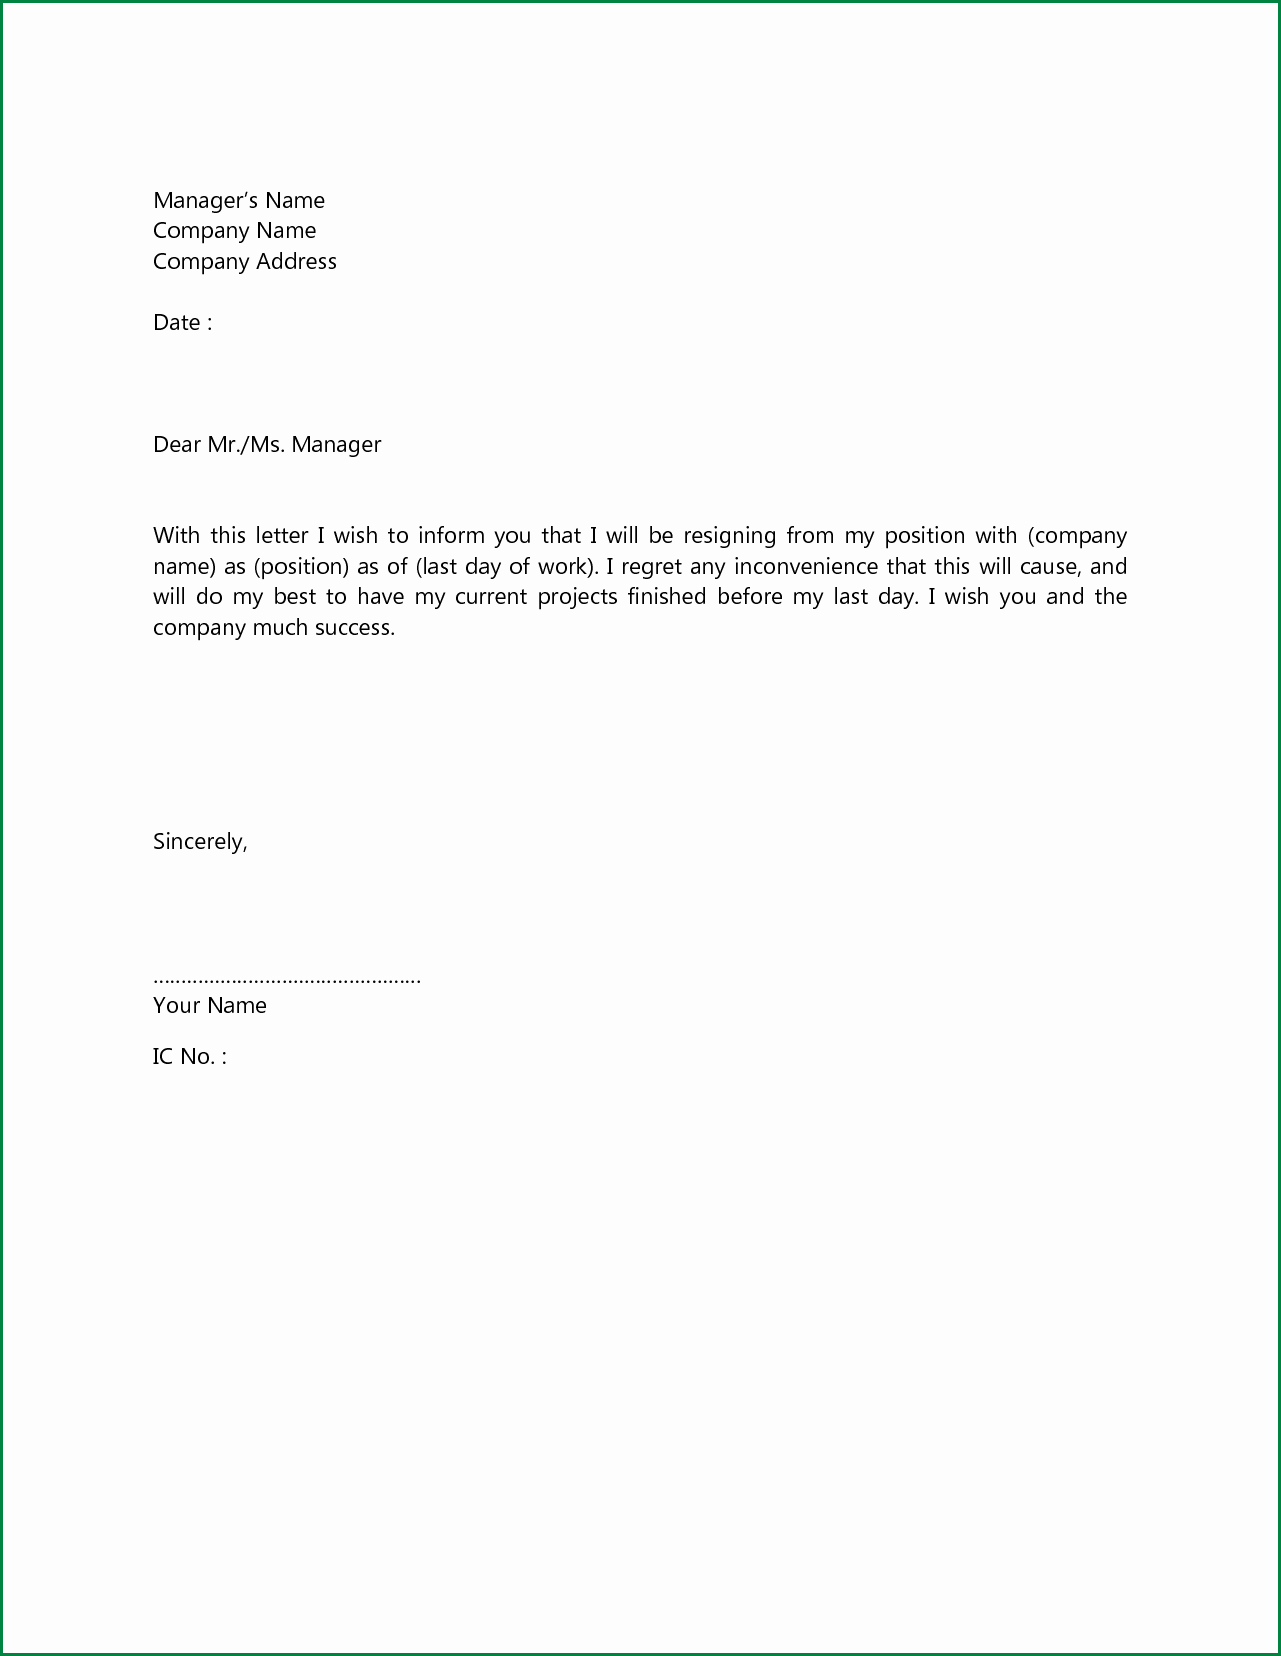 Short Application Cover Letter Best Of Basic Letter thevillas Co with Short Cover Letter for Job